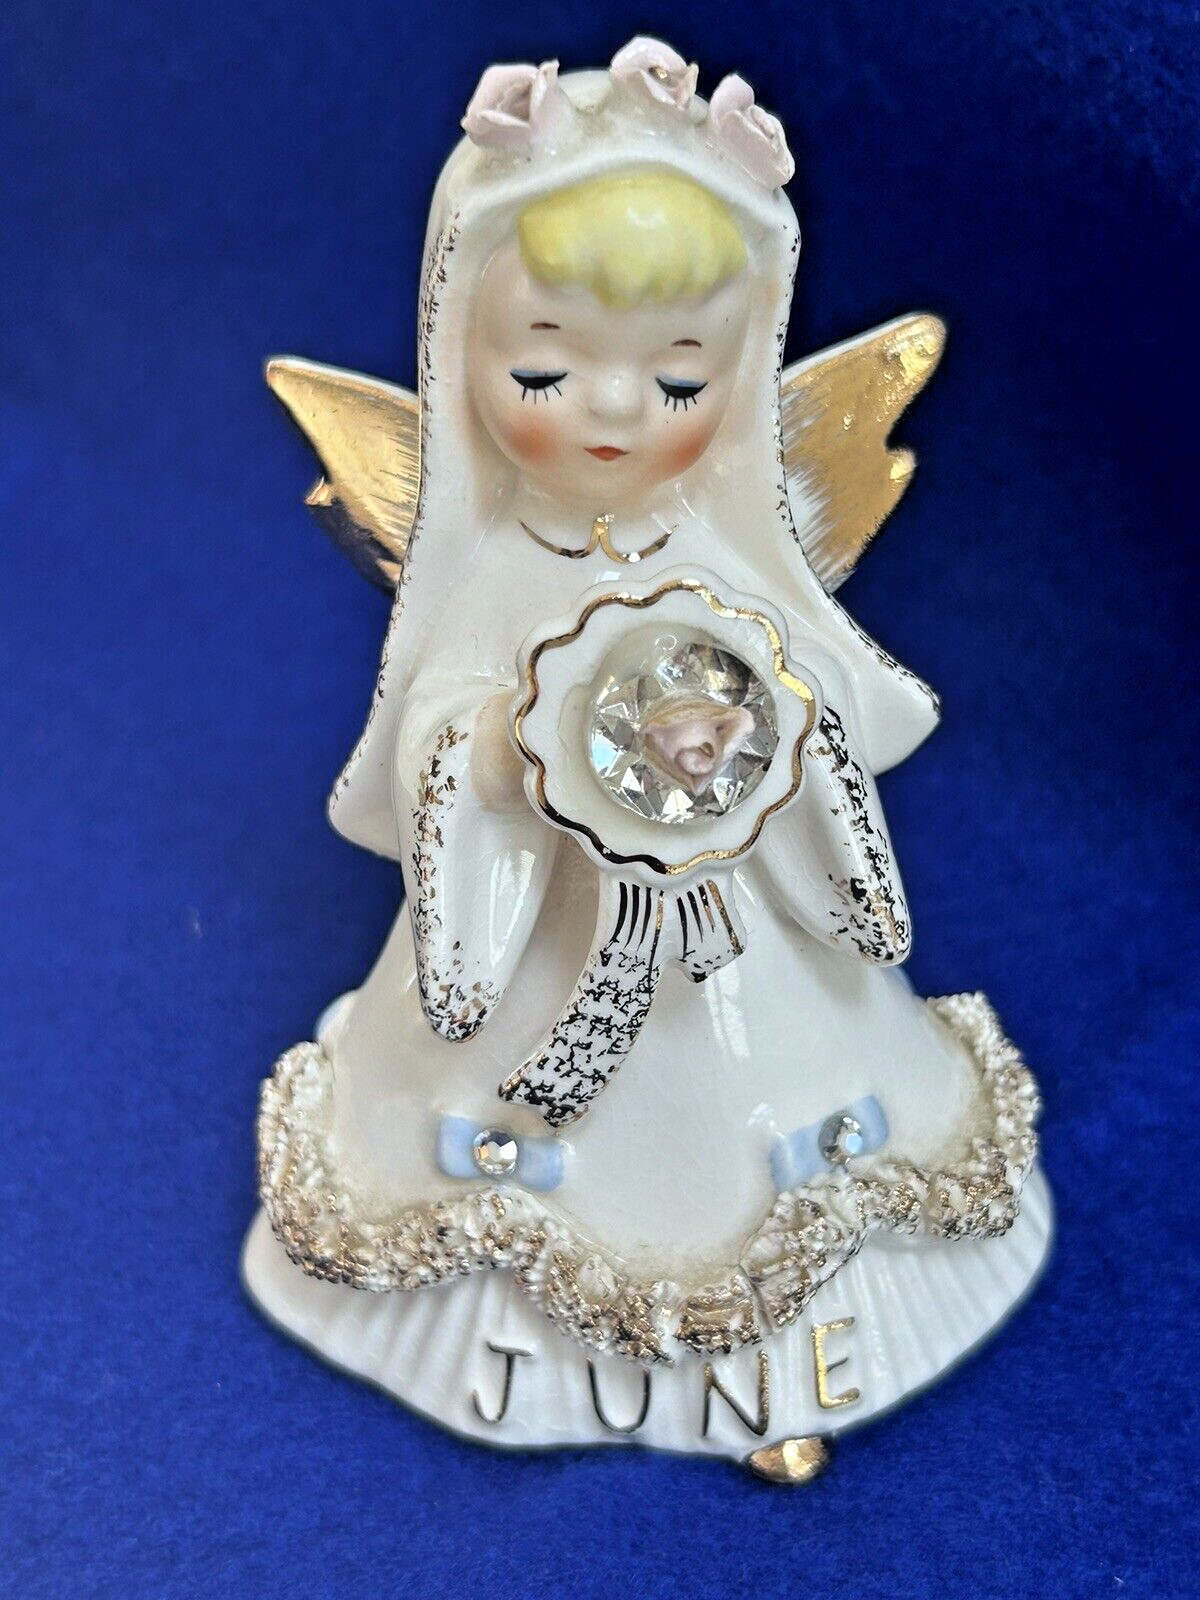 Lefton JUNE Bride Wedding Birthday Girl Angel Figurine Rhinestones Vintage 1950s